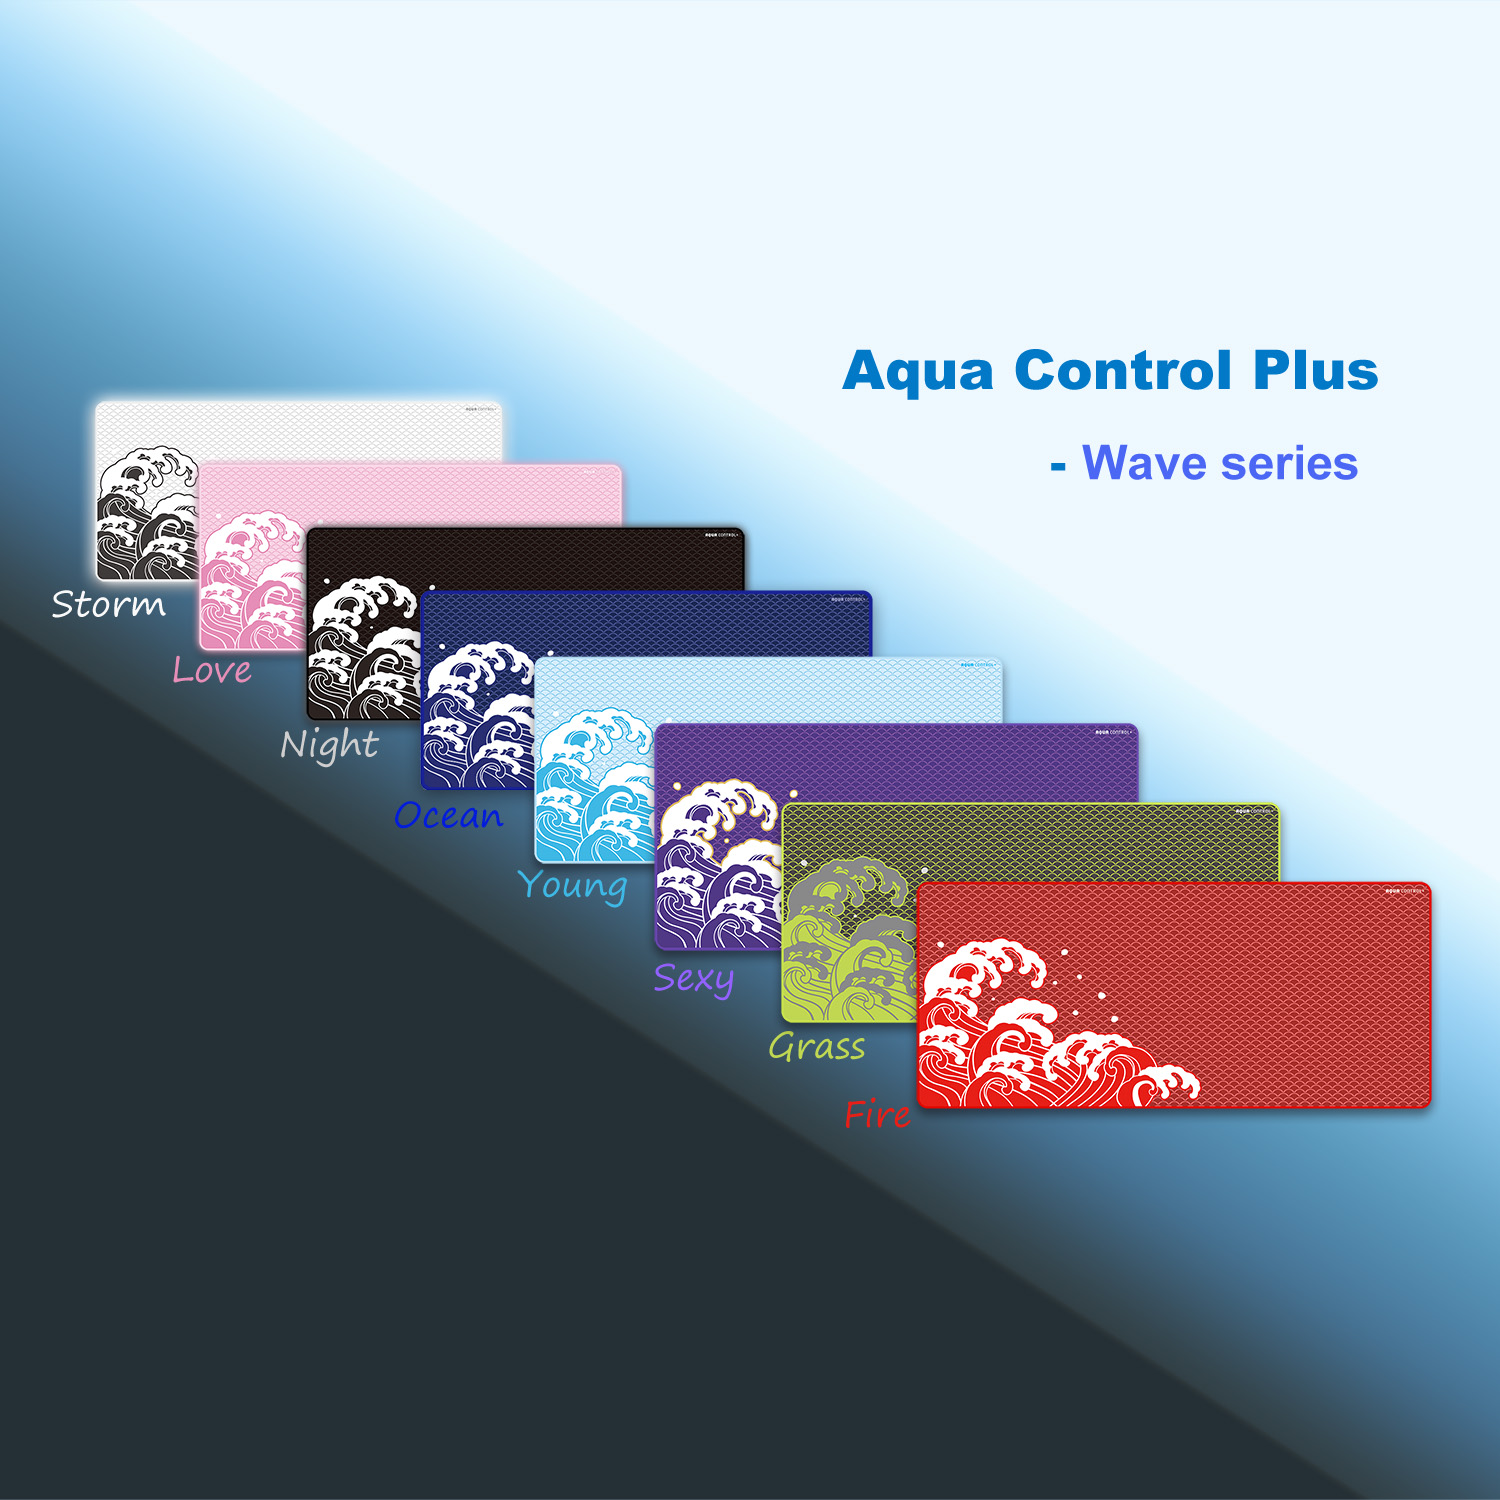 X-raypad Aqua Control Plus Review 